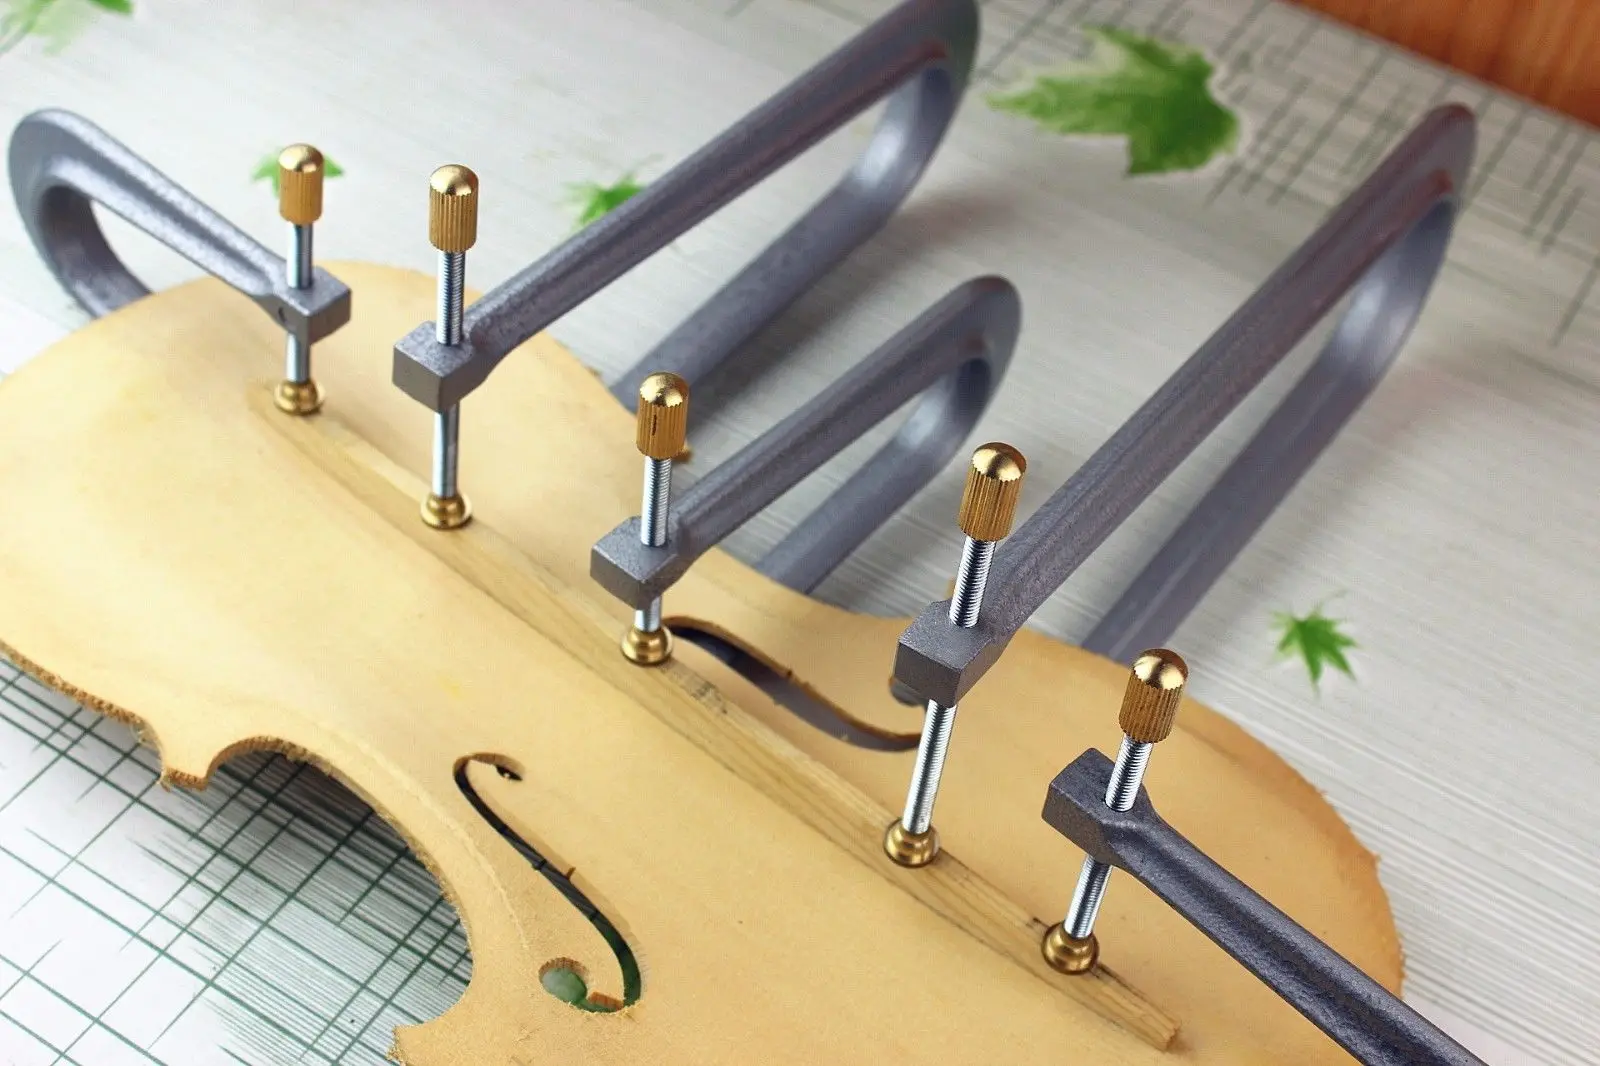 1 set Violin Bass Bar clamp luthier tools, violin making install repair tools